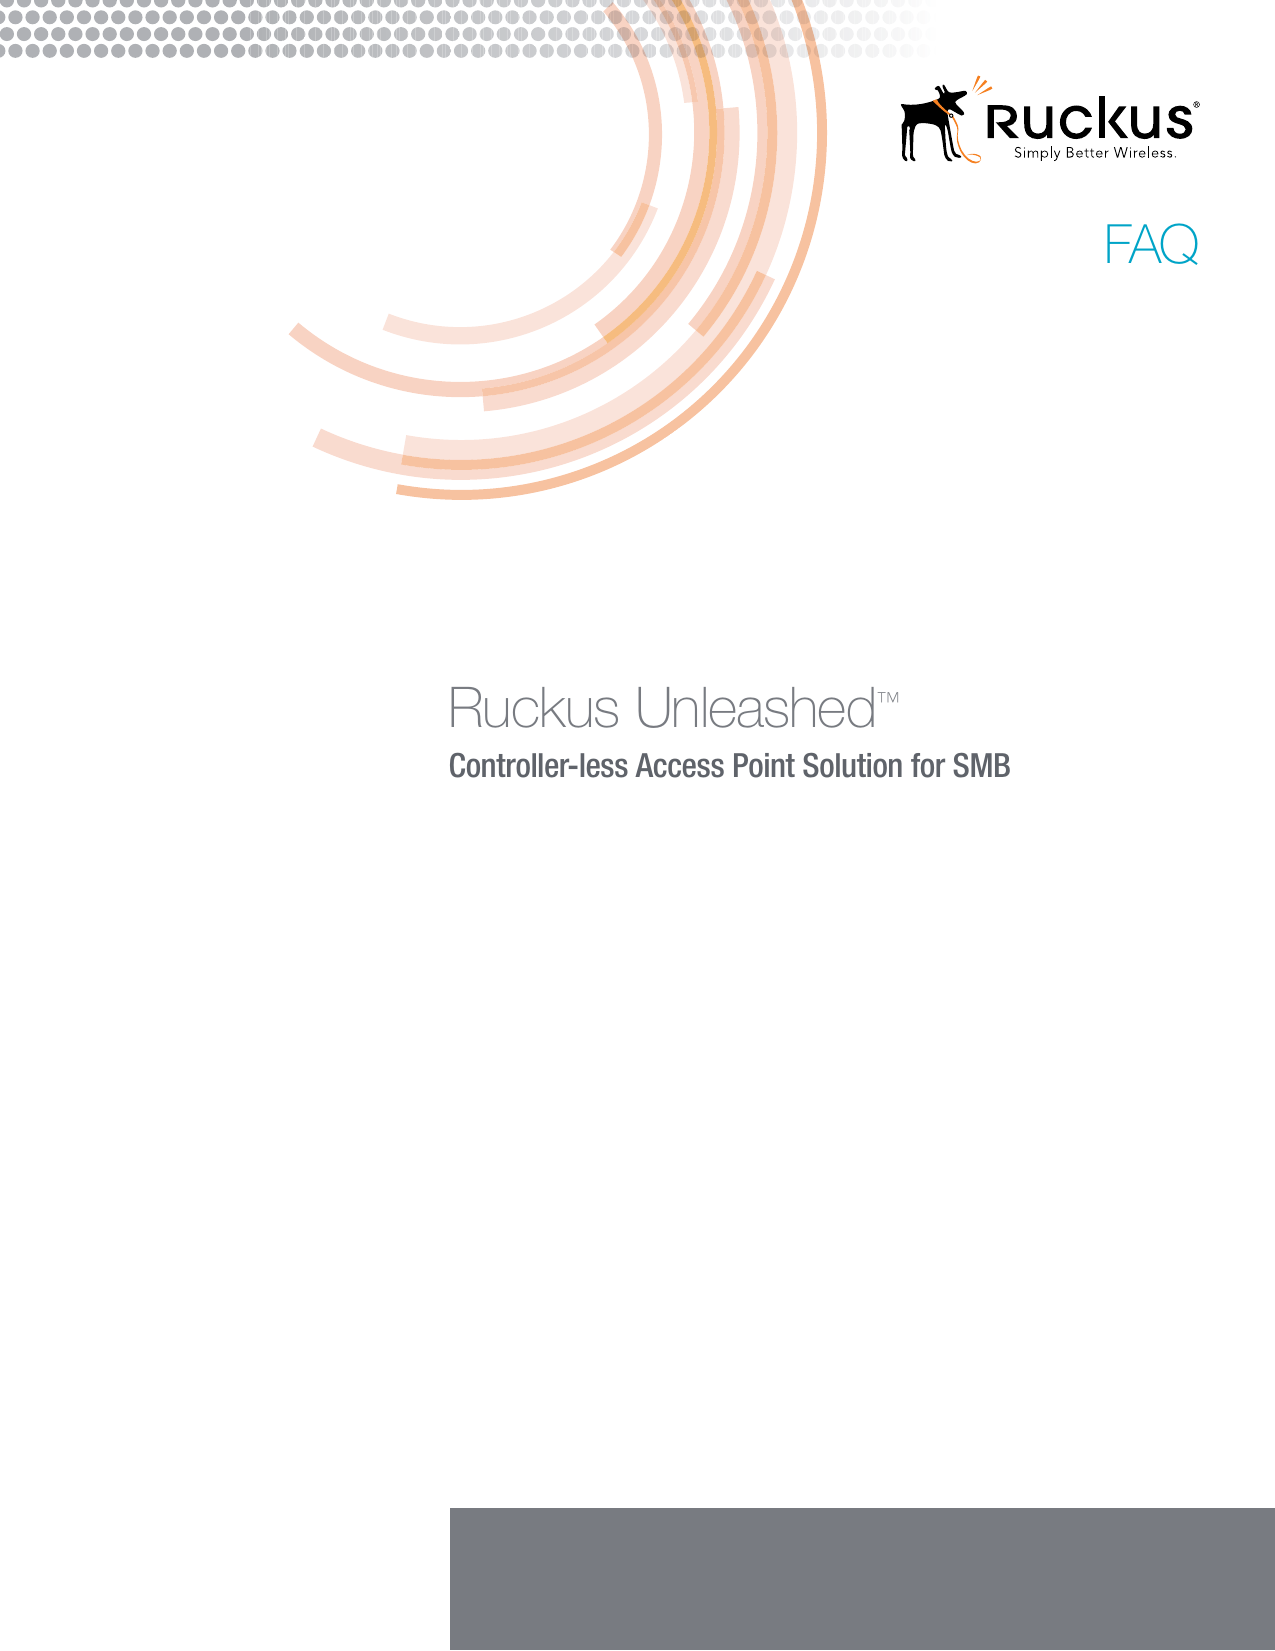 Page 1 of 7 - Ruckus  Unleashed 200.1 (GA) FAQ